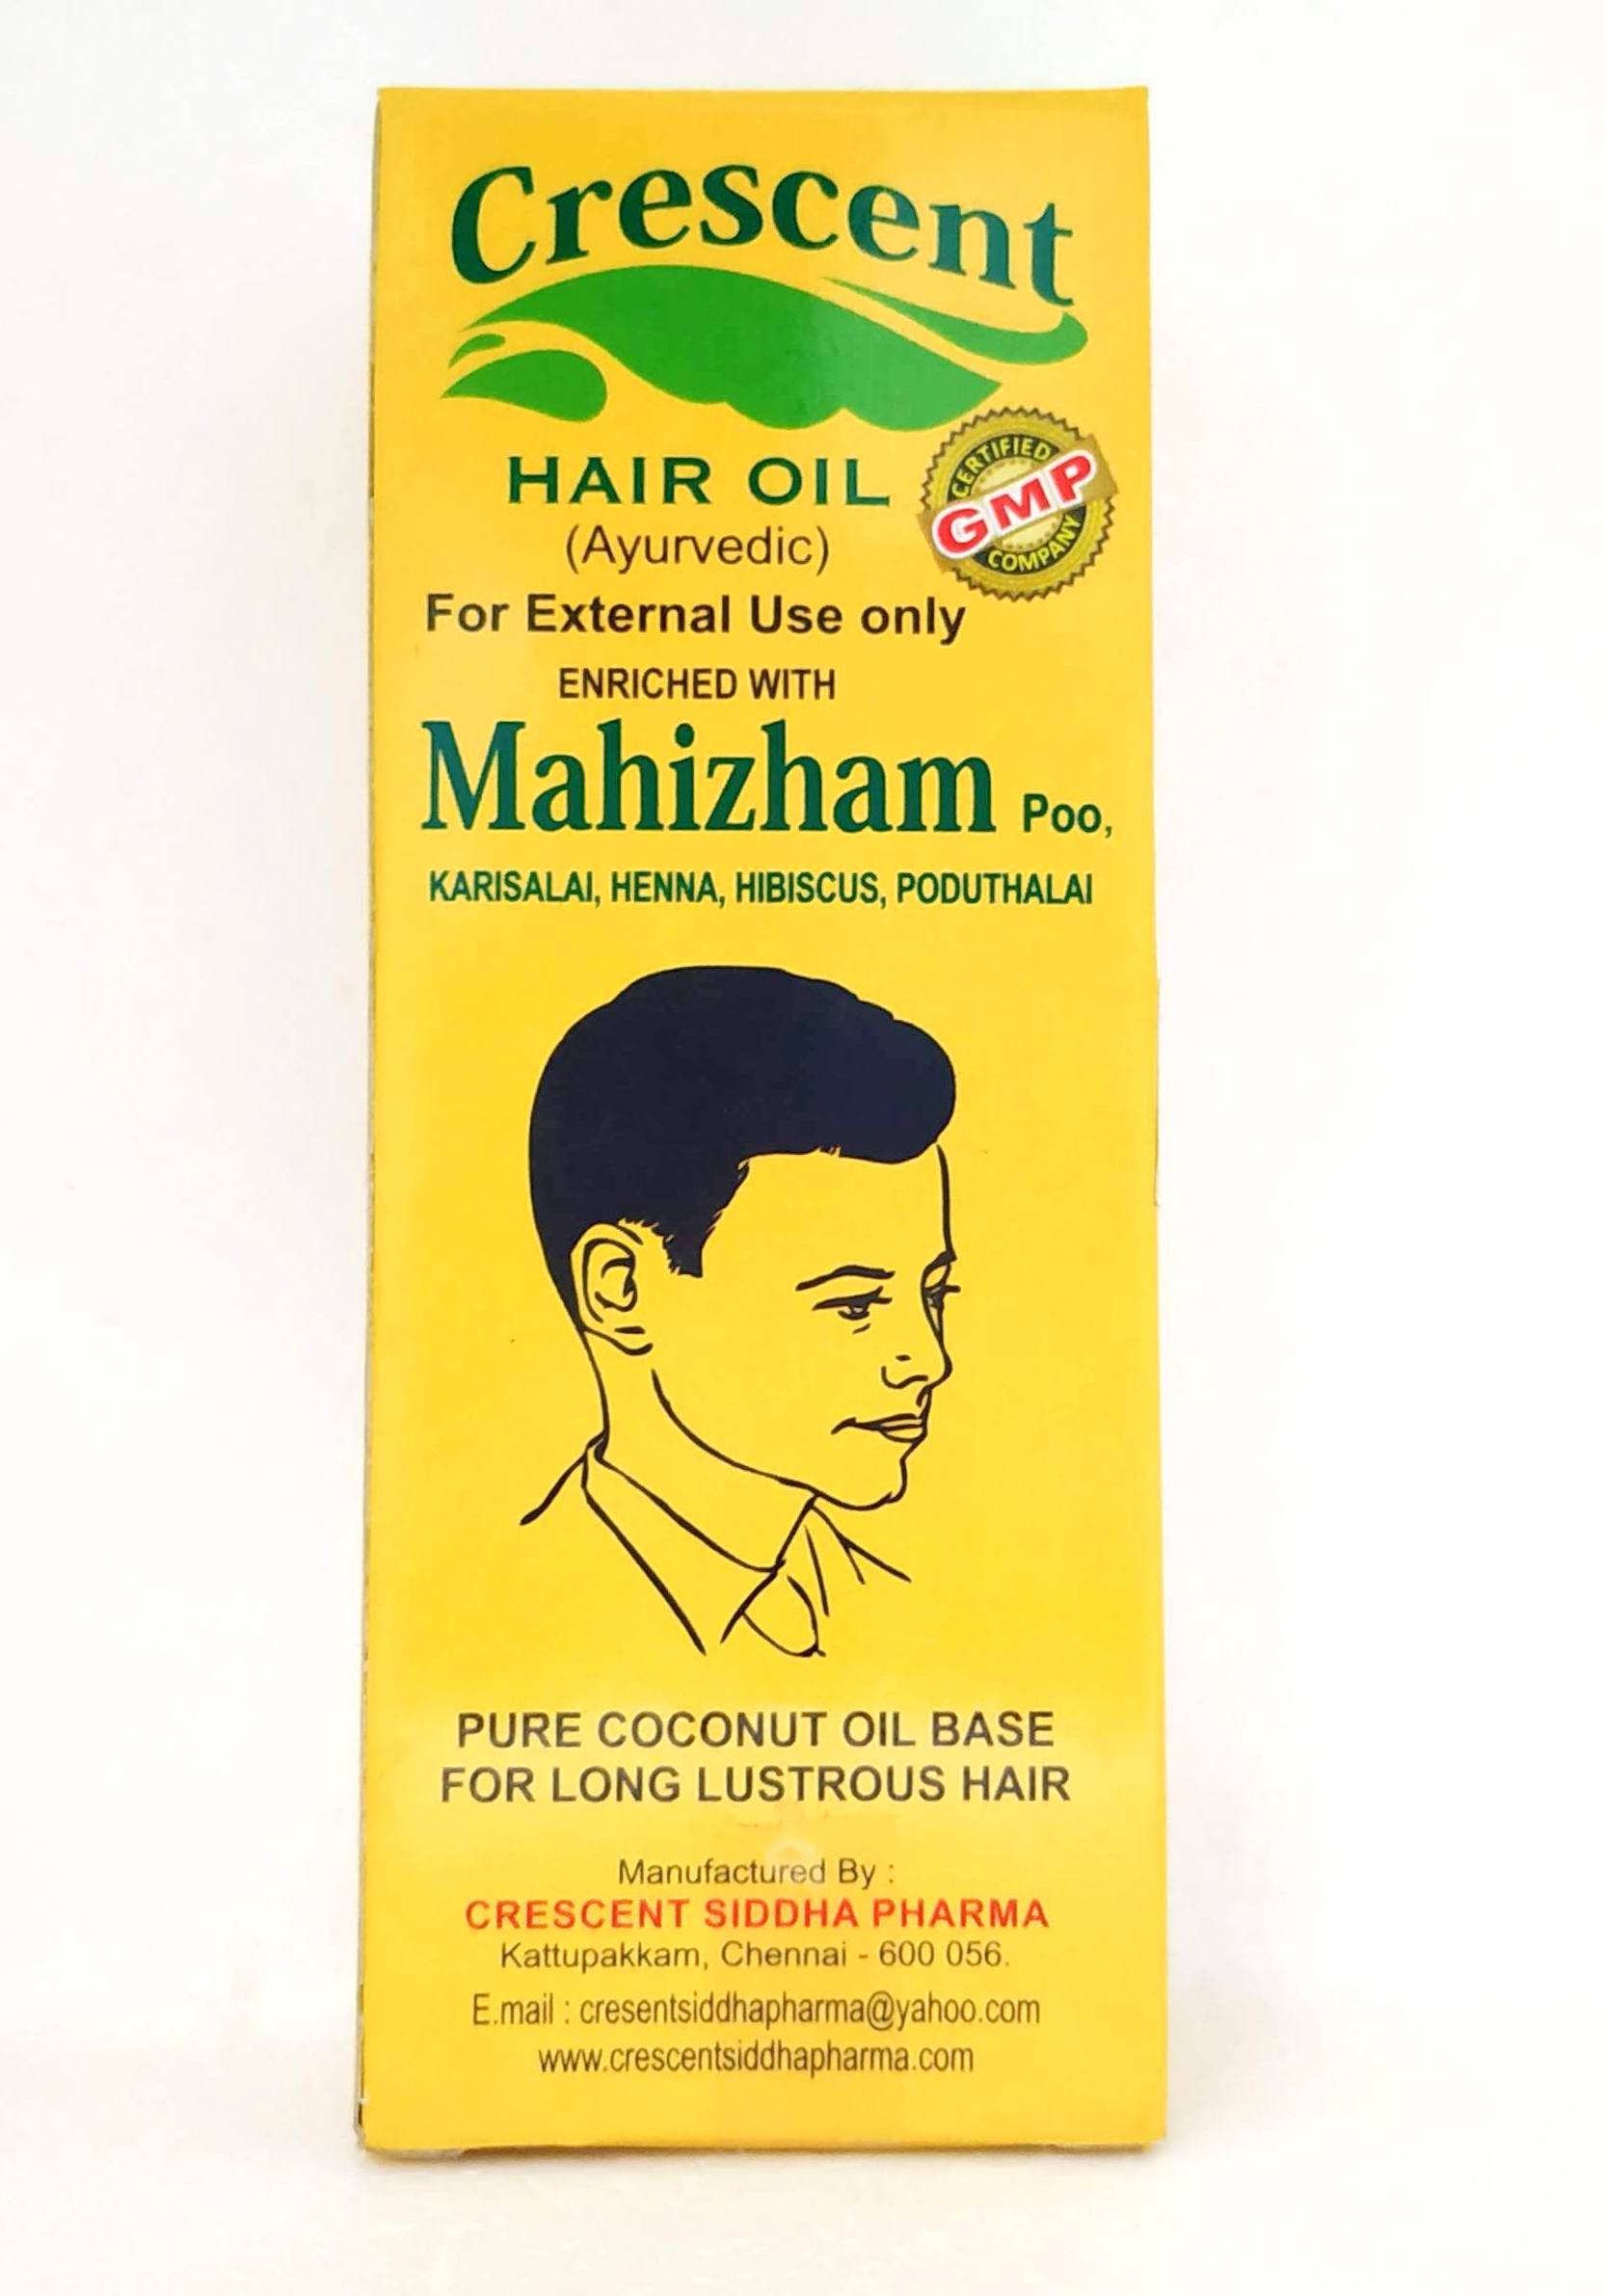 Mahizham poo hair oil 100ml -  Crescent - Medizzo.com